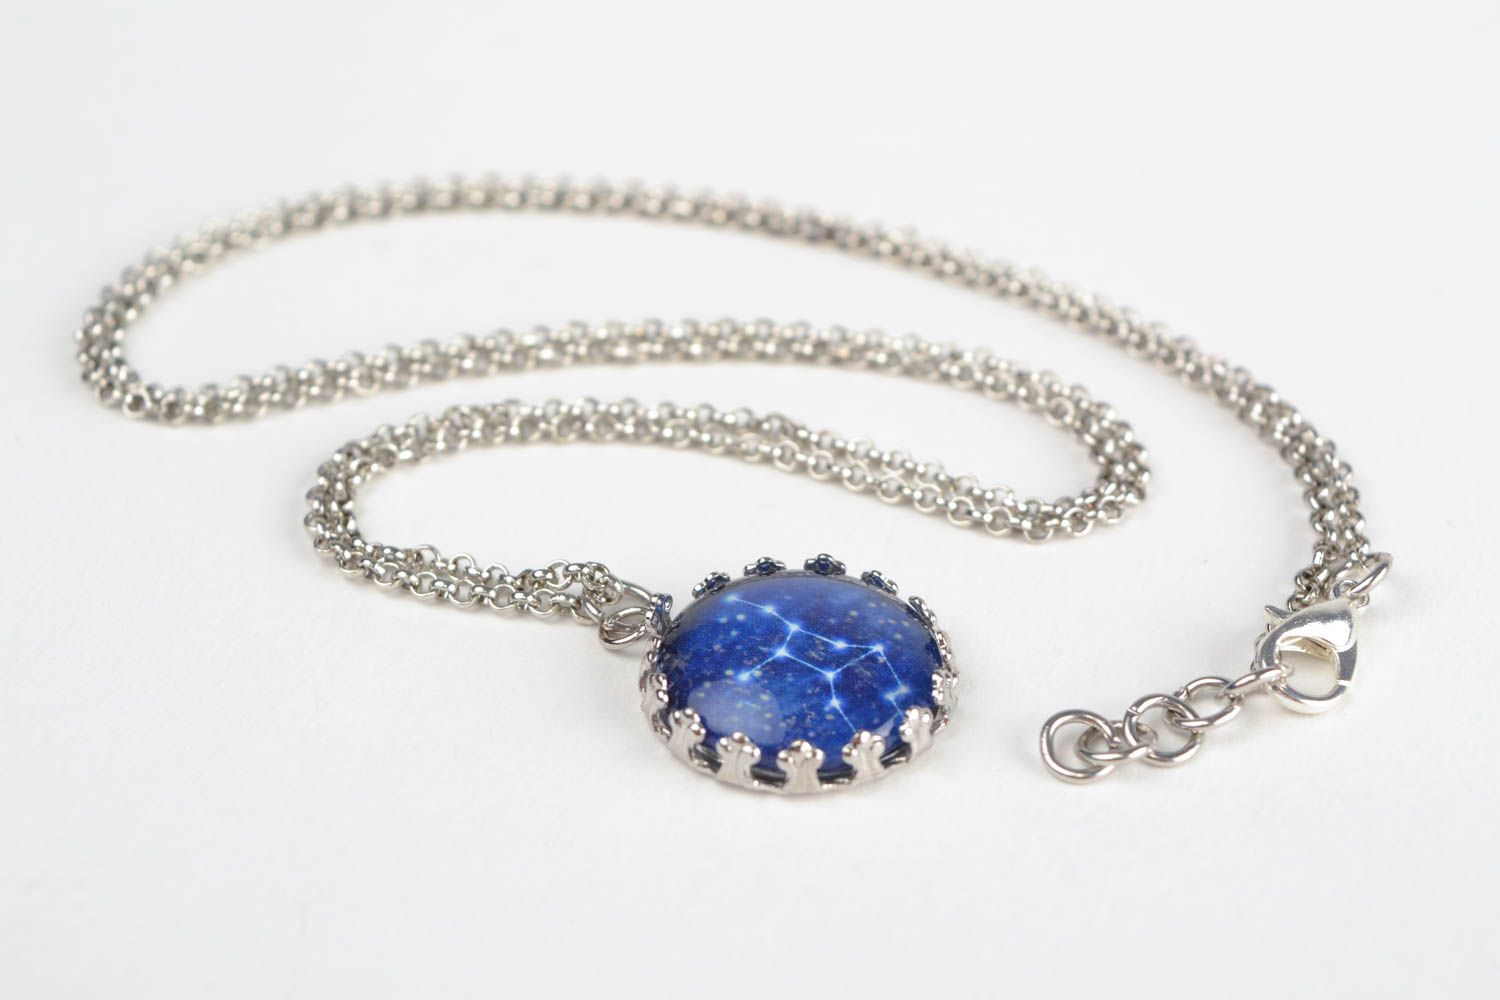 Designer handmade round blue glass pendant with Virgo constellation on chain photo 1